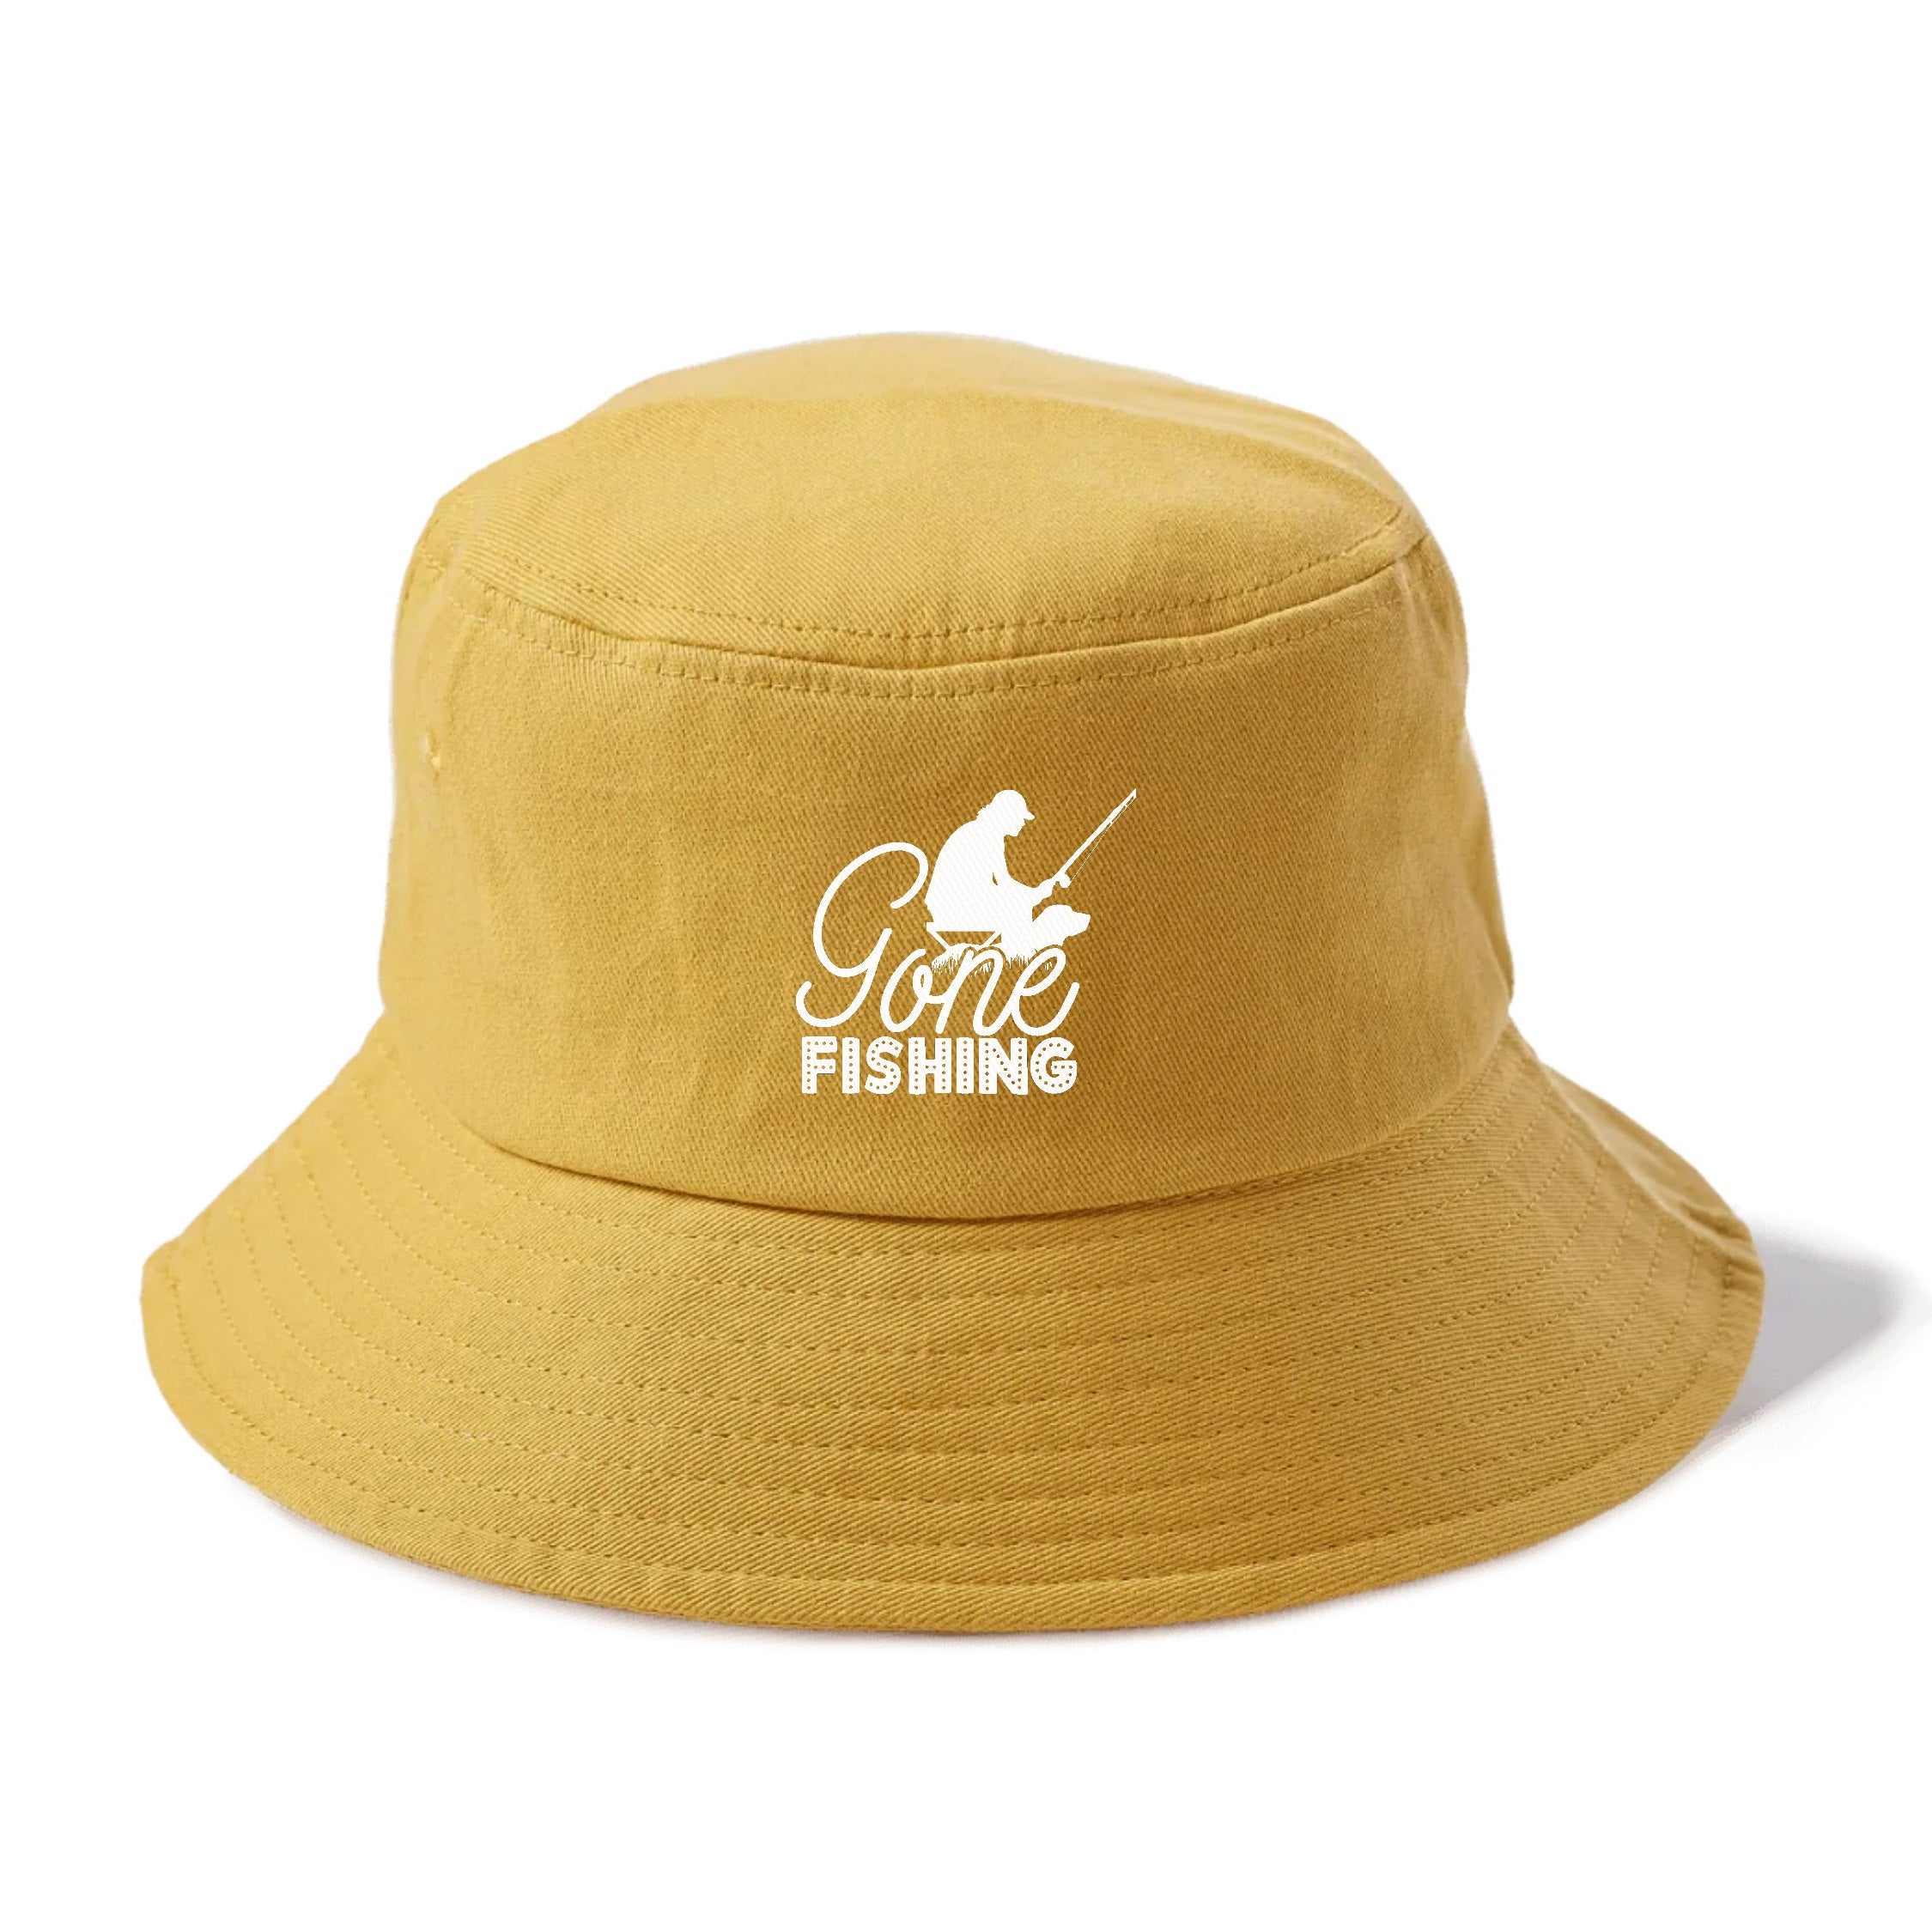 Gone Fishing Bucket Hat Golden Harvest(Yellow)